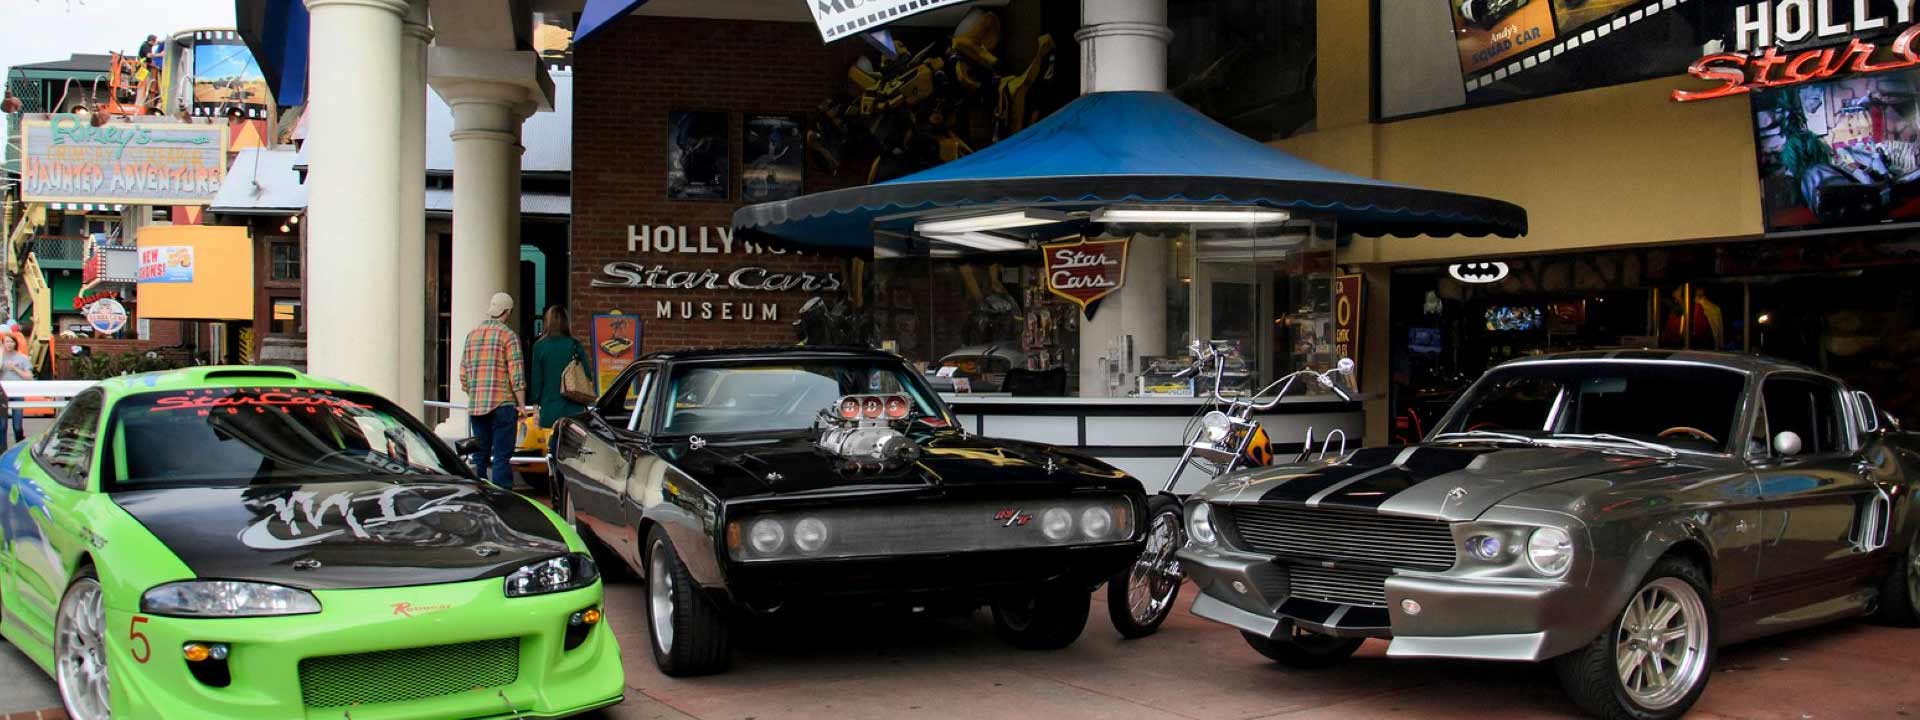 Hollywood Stars Cars